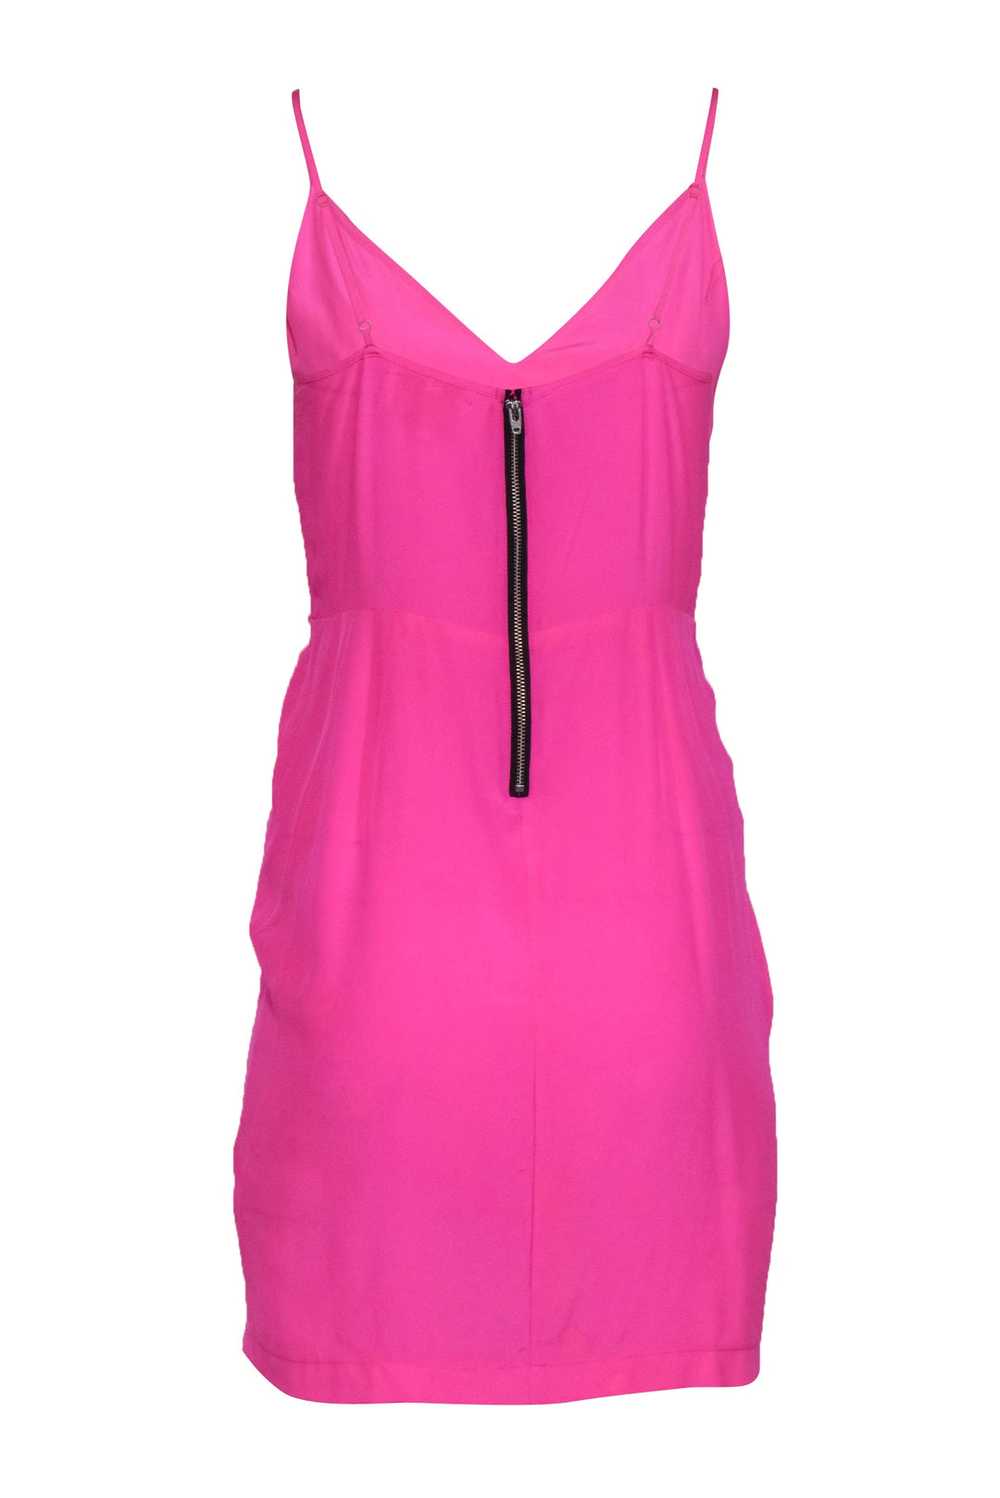 Yumi Kim - Hot Pink Sleeveless Mini Dress Sz S - image 3